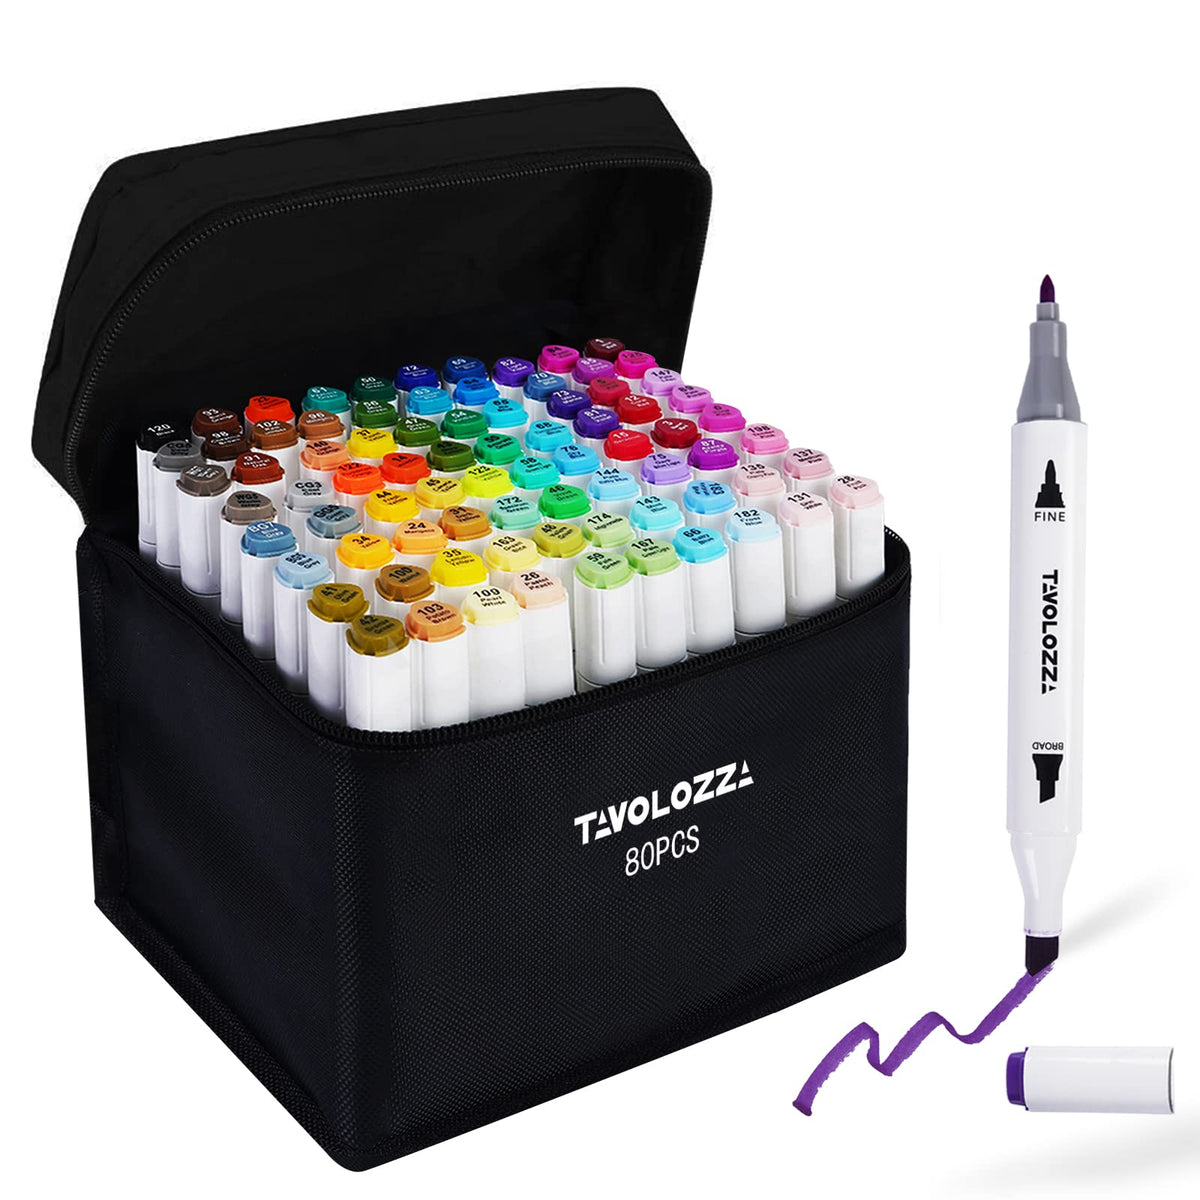 hhhouu 100 Colors Fine Tip Markers Dual Tip Brush Pens Art Markers Set —  CHIMIYA